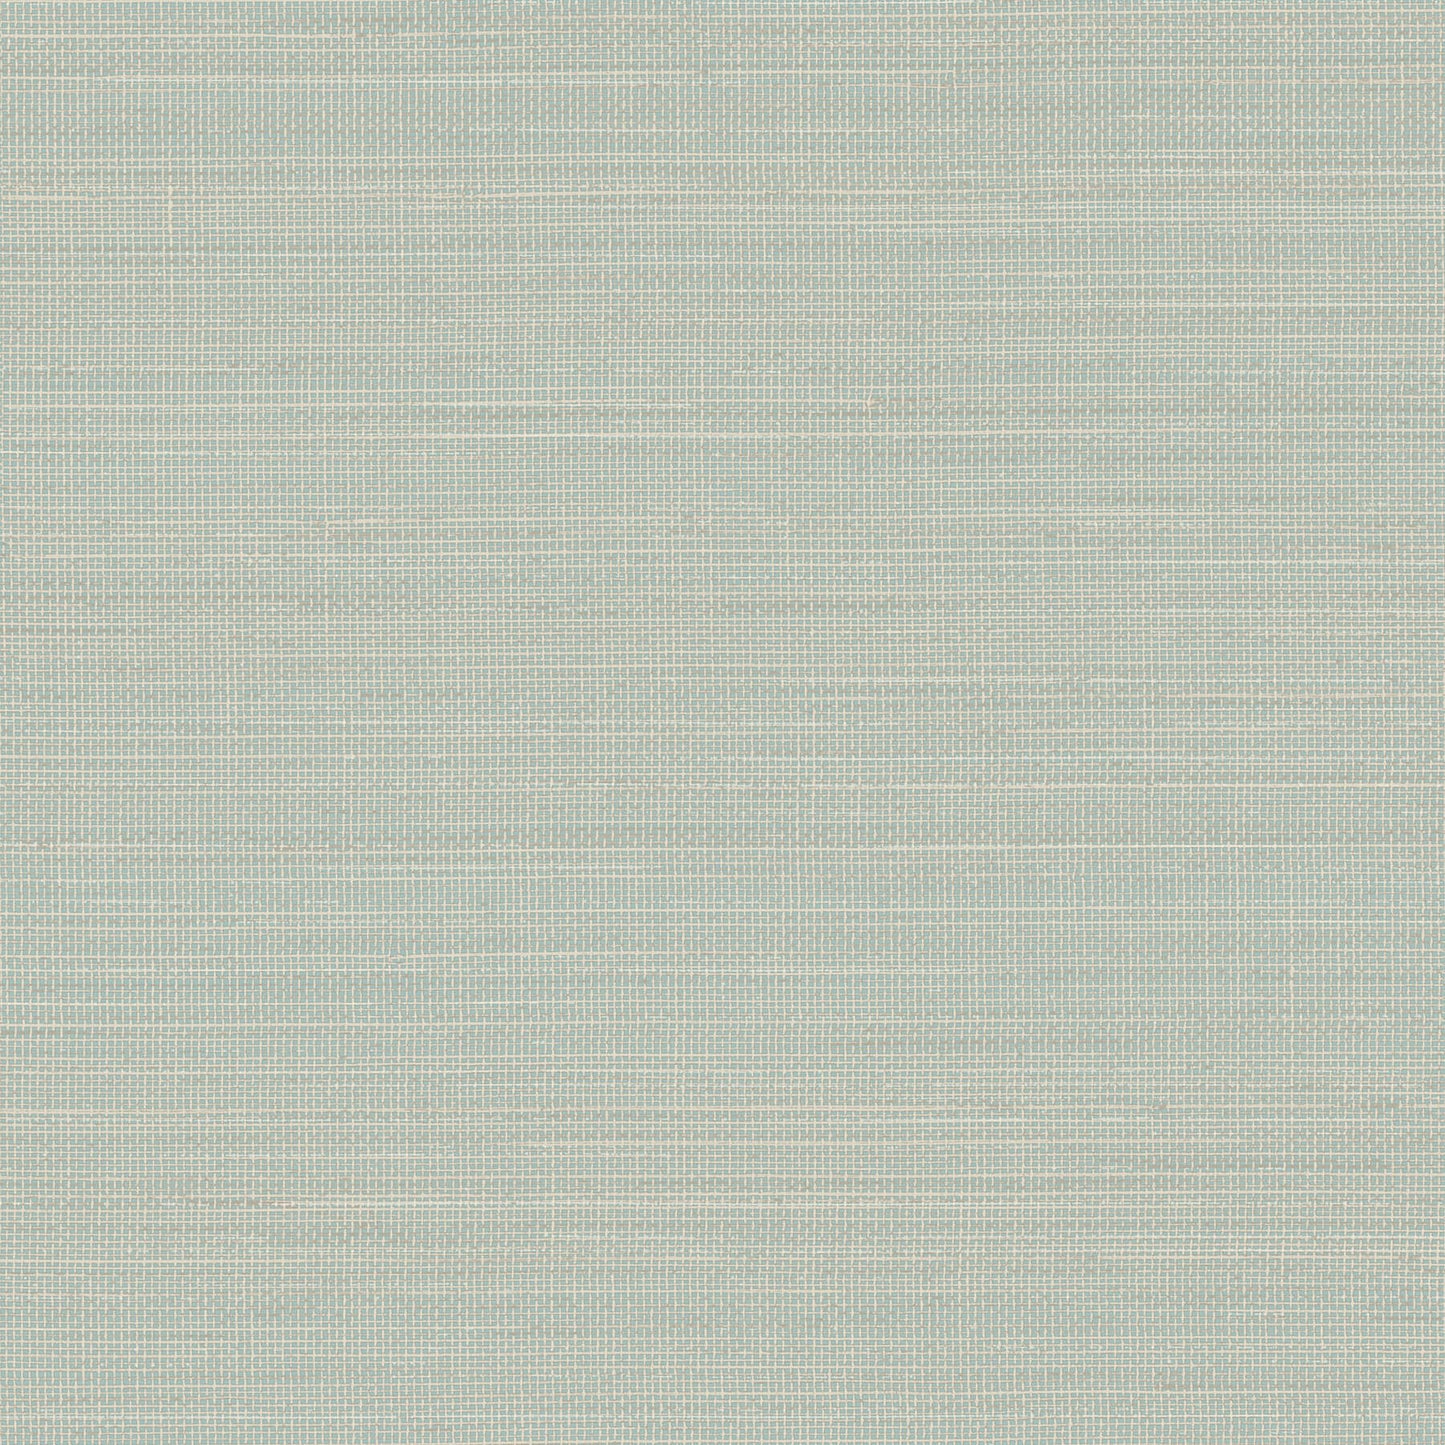 Chesapeake Blue Heron Wallpaper Collection - SAMPLE